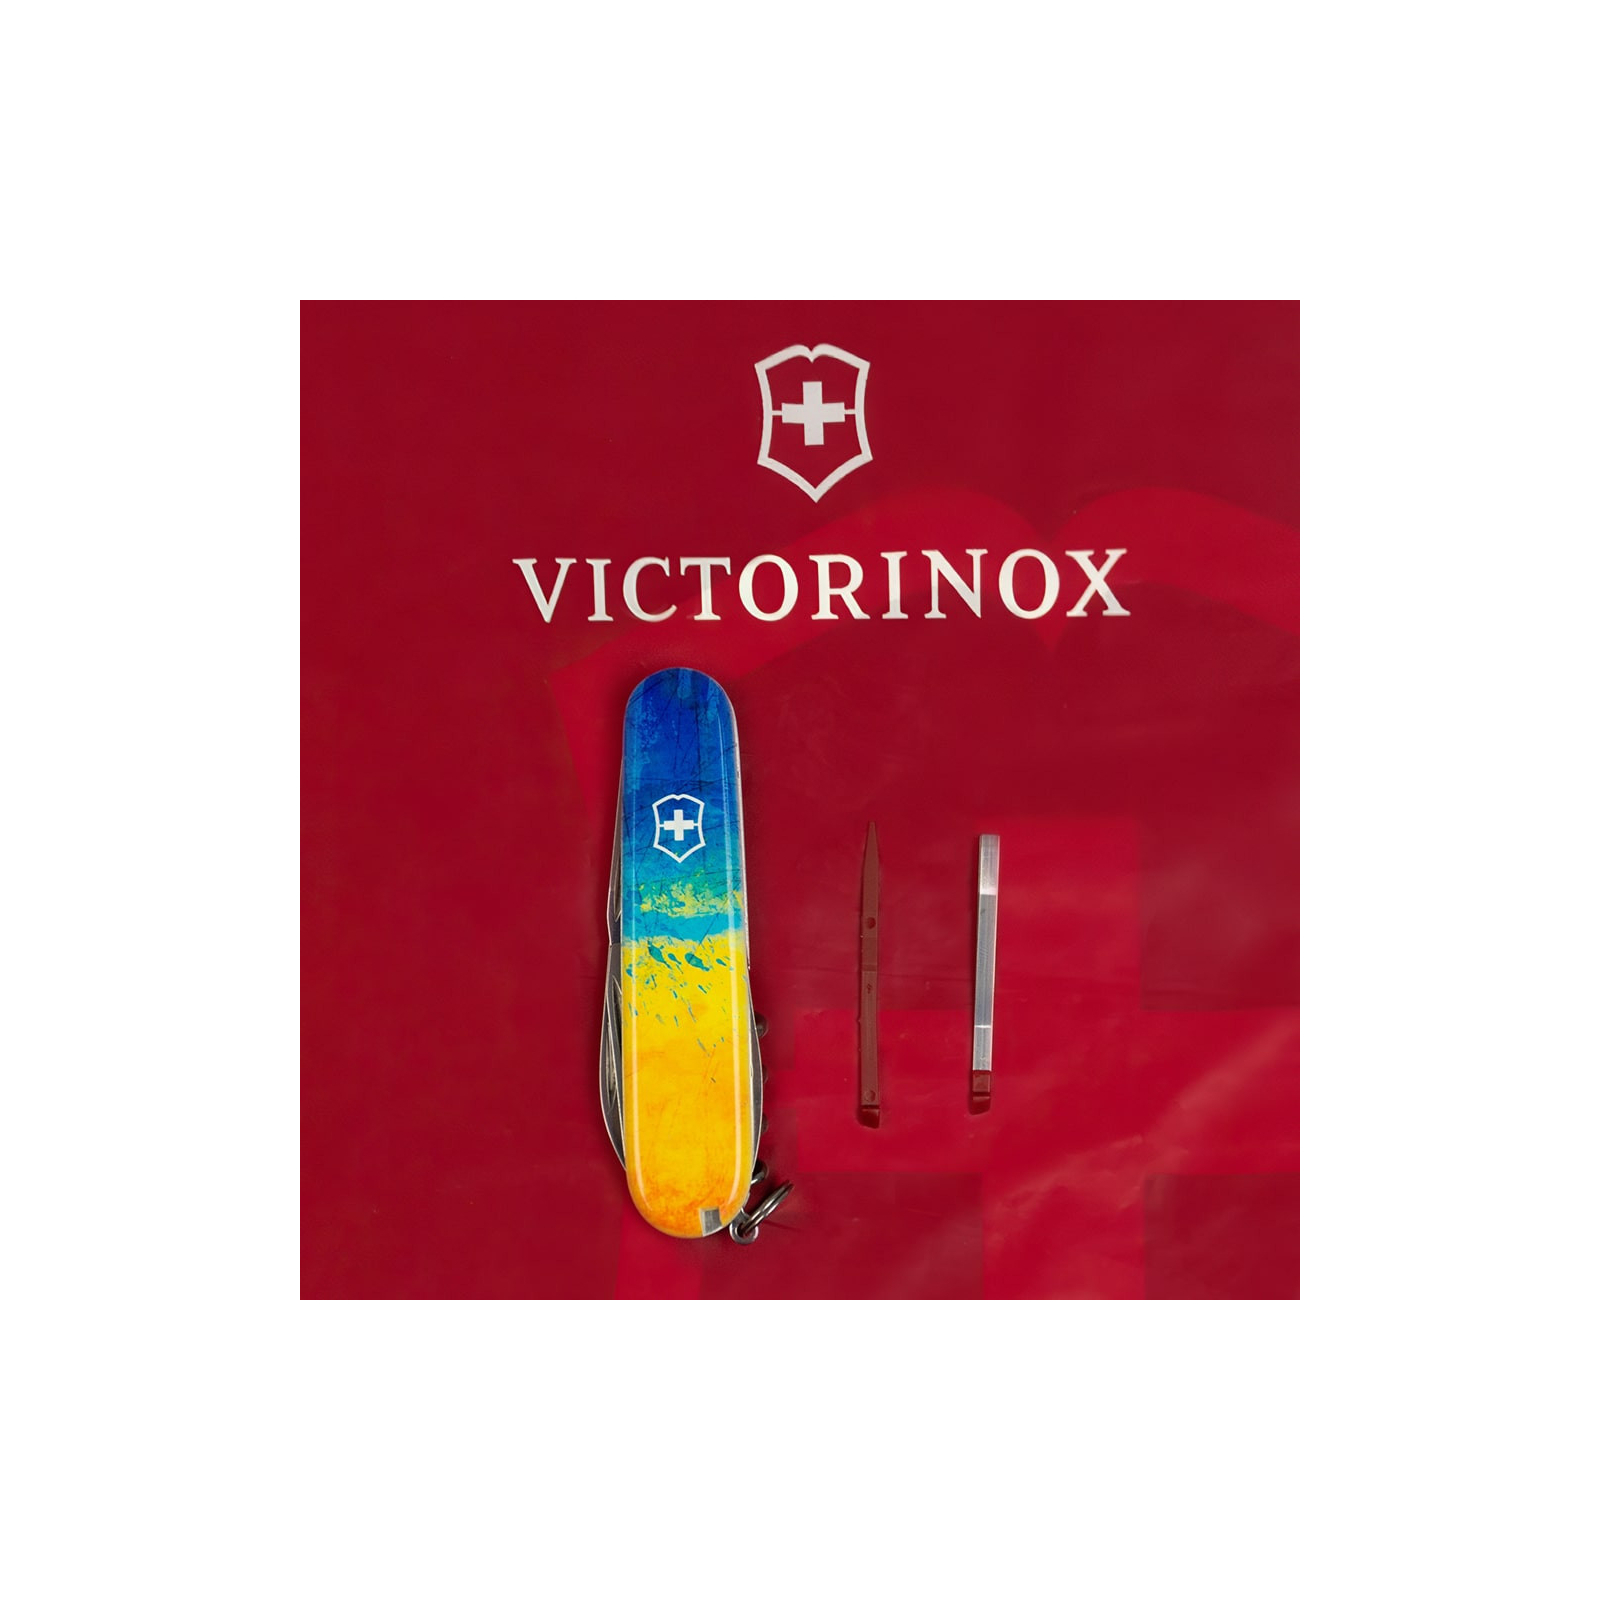 Нож Victorinox Spartan Ukraine 91 мм Жовто-синій малюнок (1.3603.7_T3100p) изображение 6